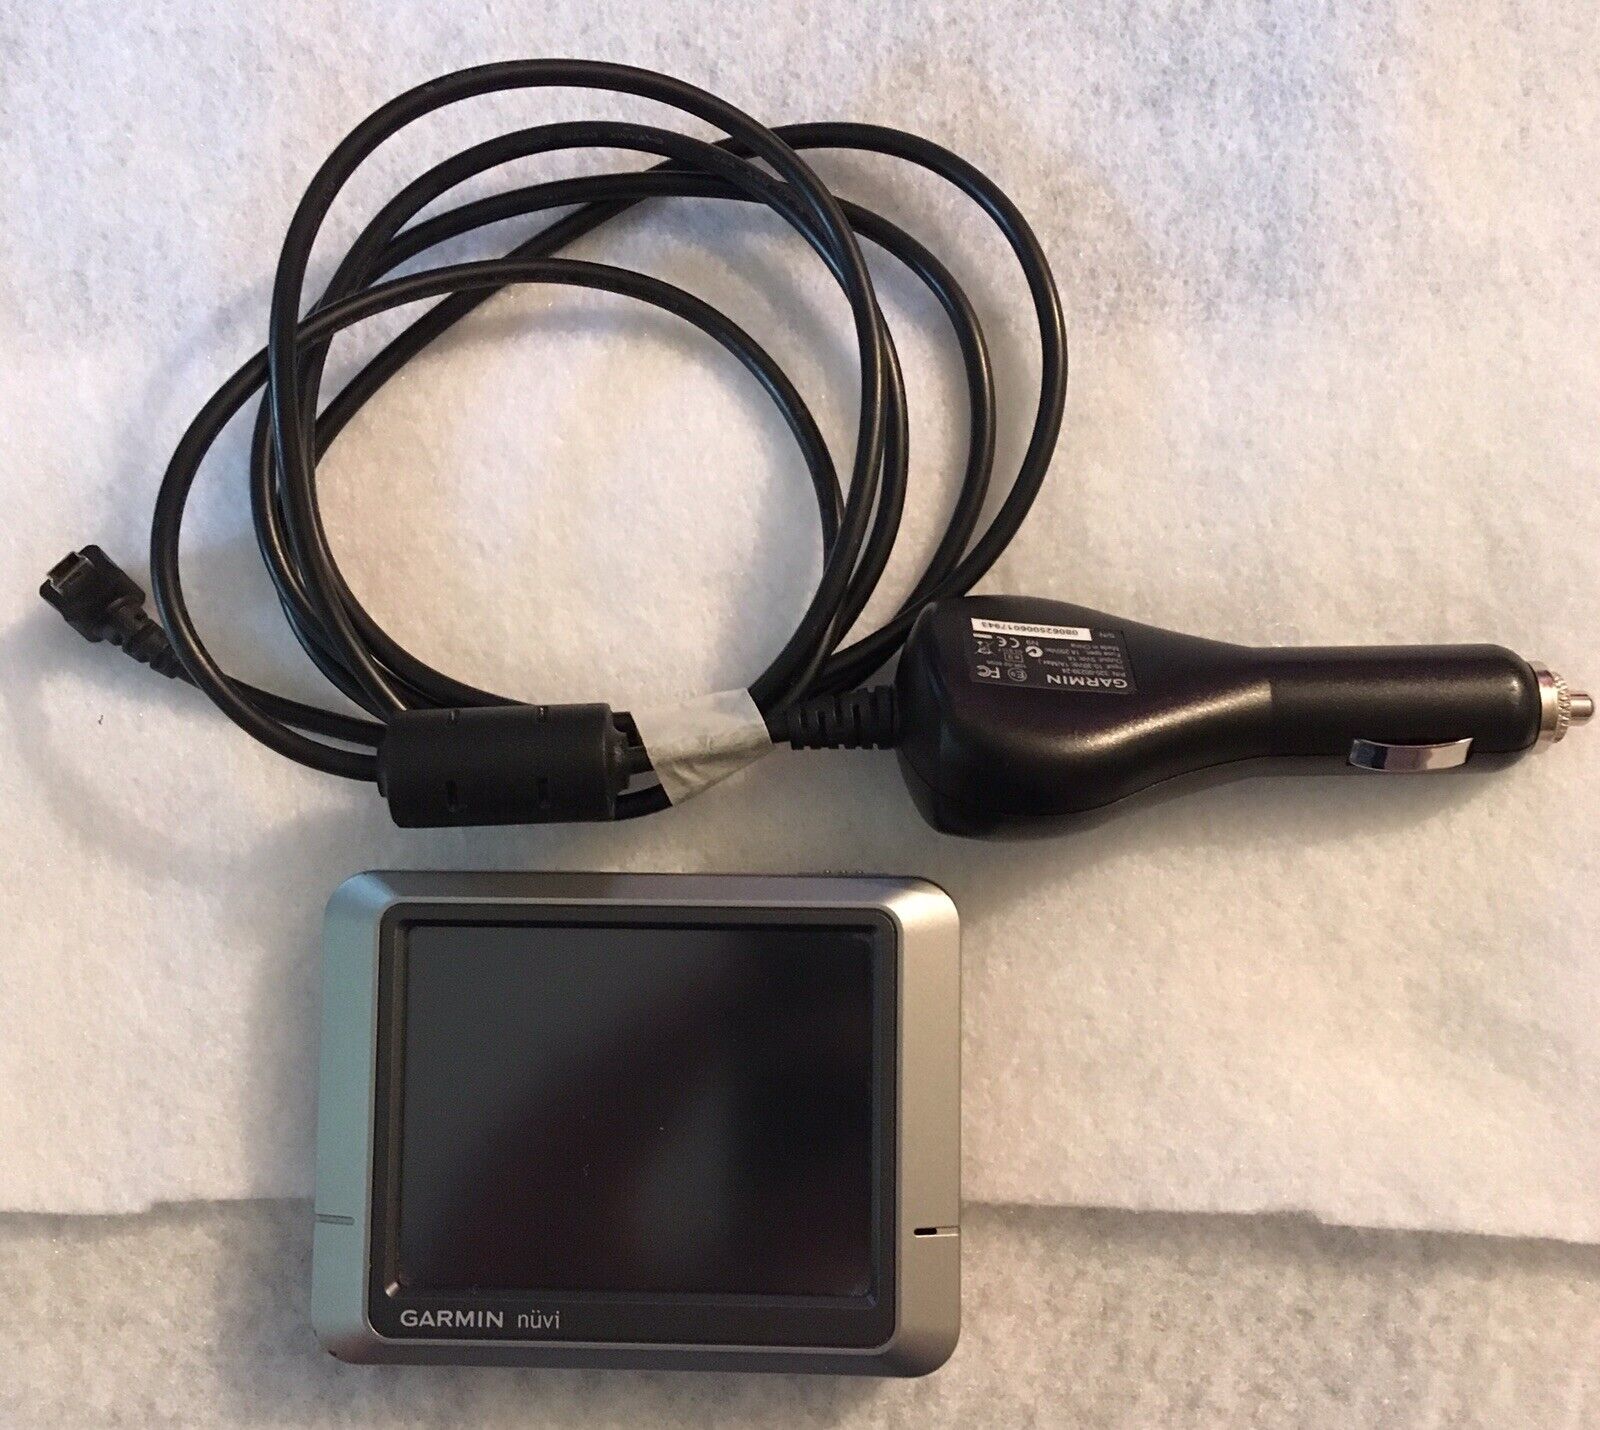 Colector Peculiar no pagado Garmin nüvi 200 GPS With Car Charger Bundle Automotive Mountable | eBay